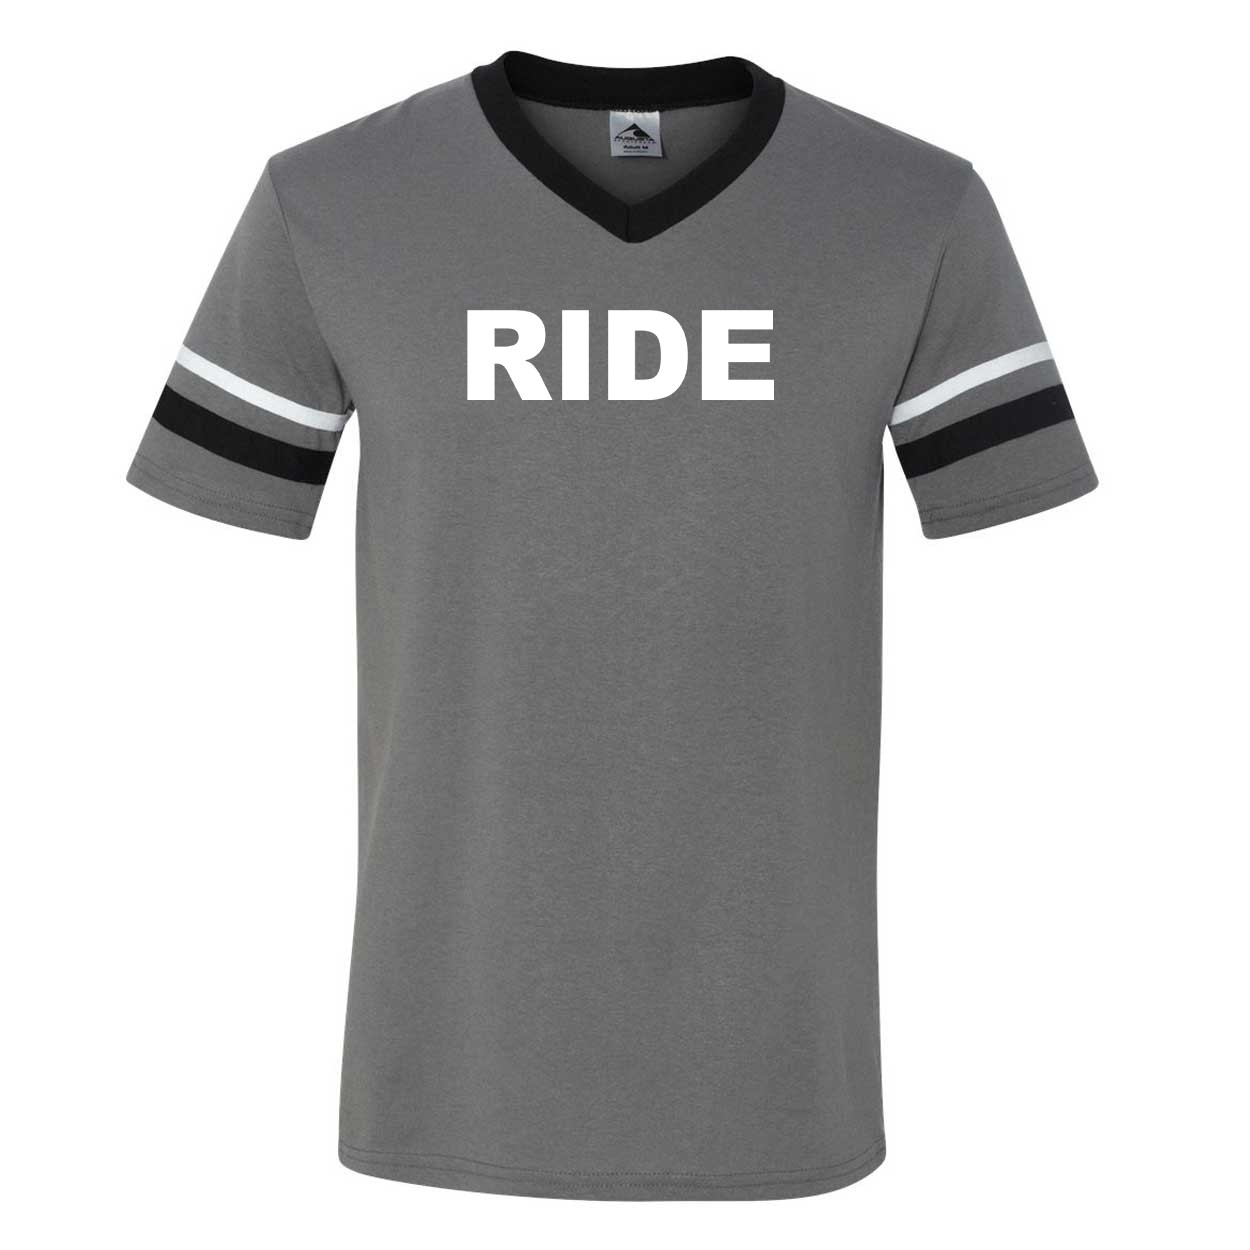 Ride Brand Logo Classic Premium Striped Jersey T-Shirt Graphite/Black/White (White Logo)